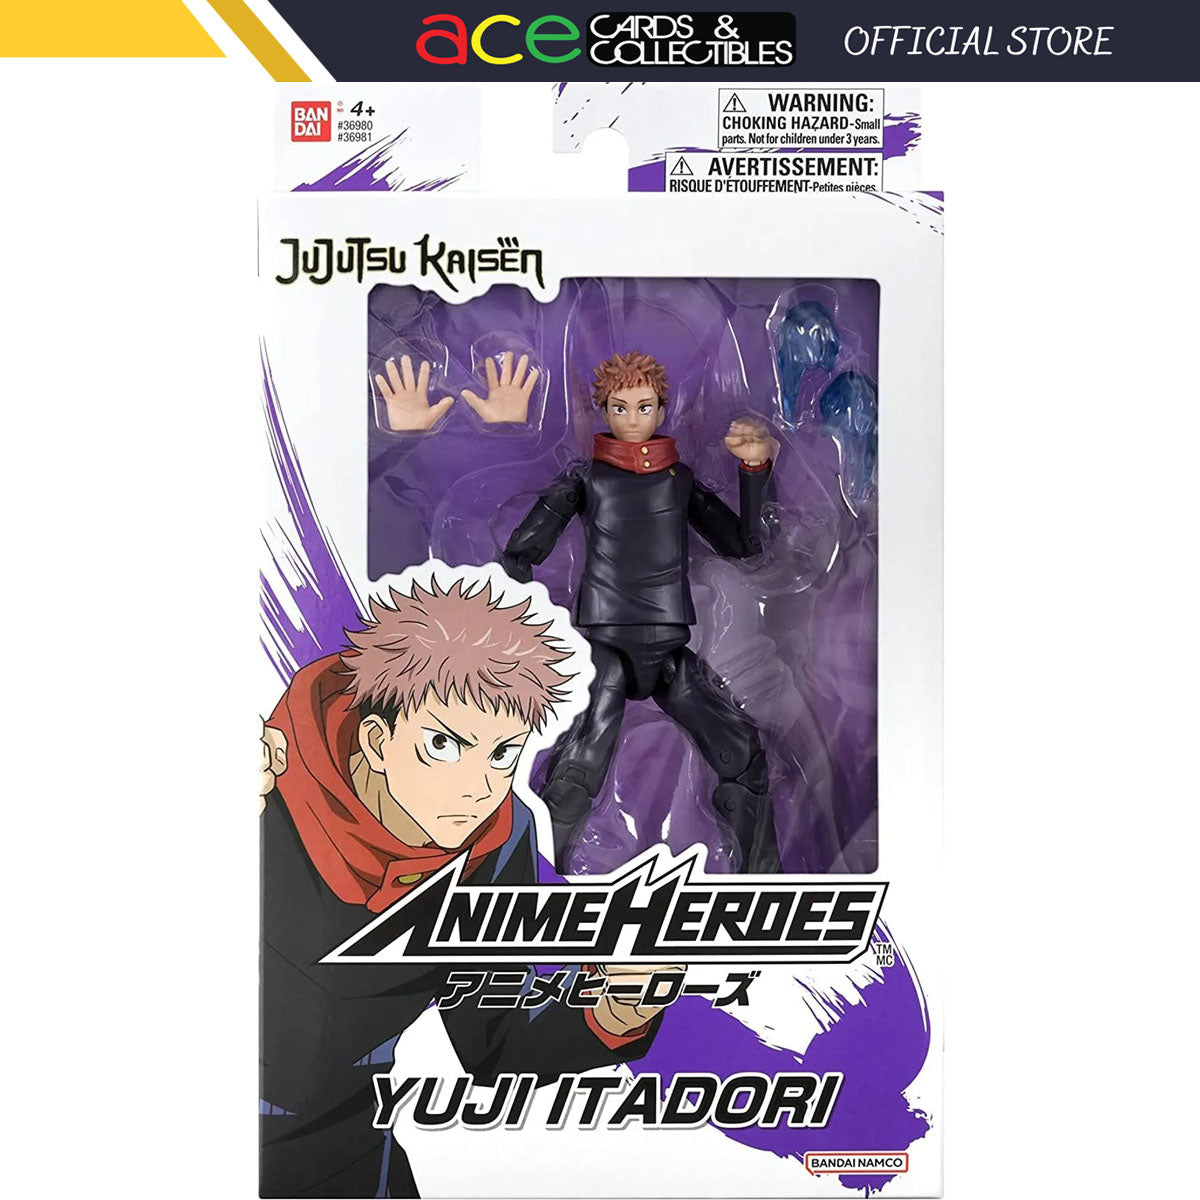 Jujutsu Kaisen Anime Heroes "Yuji Itadori" Action Figure-Bandai-Ace Cards & Collectibles